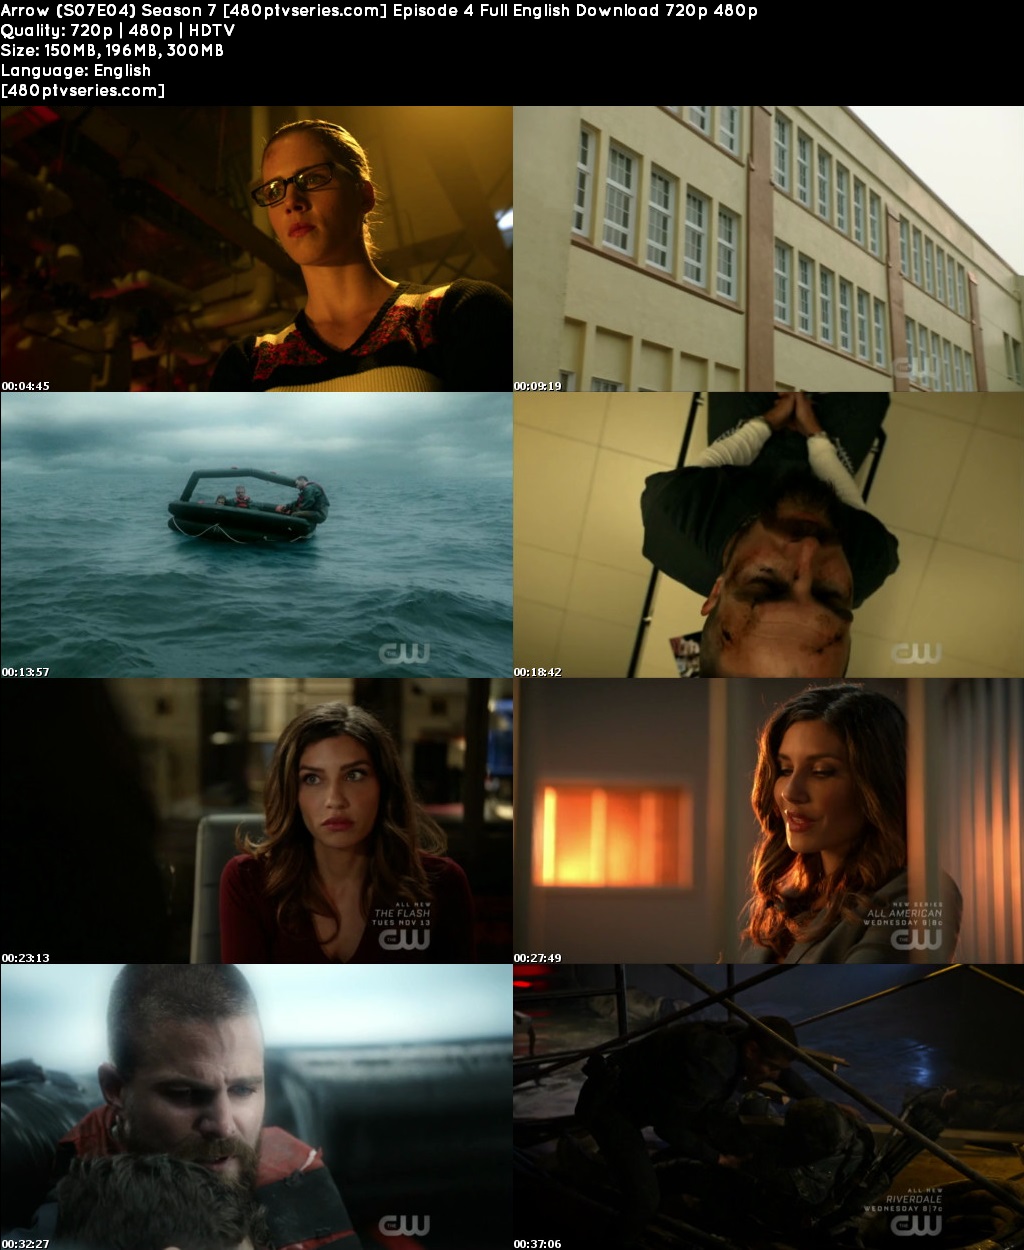 Arrow (S07E04) Season 7 Episode 4 Full English Download 720p 480p